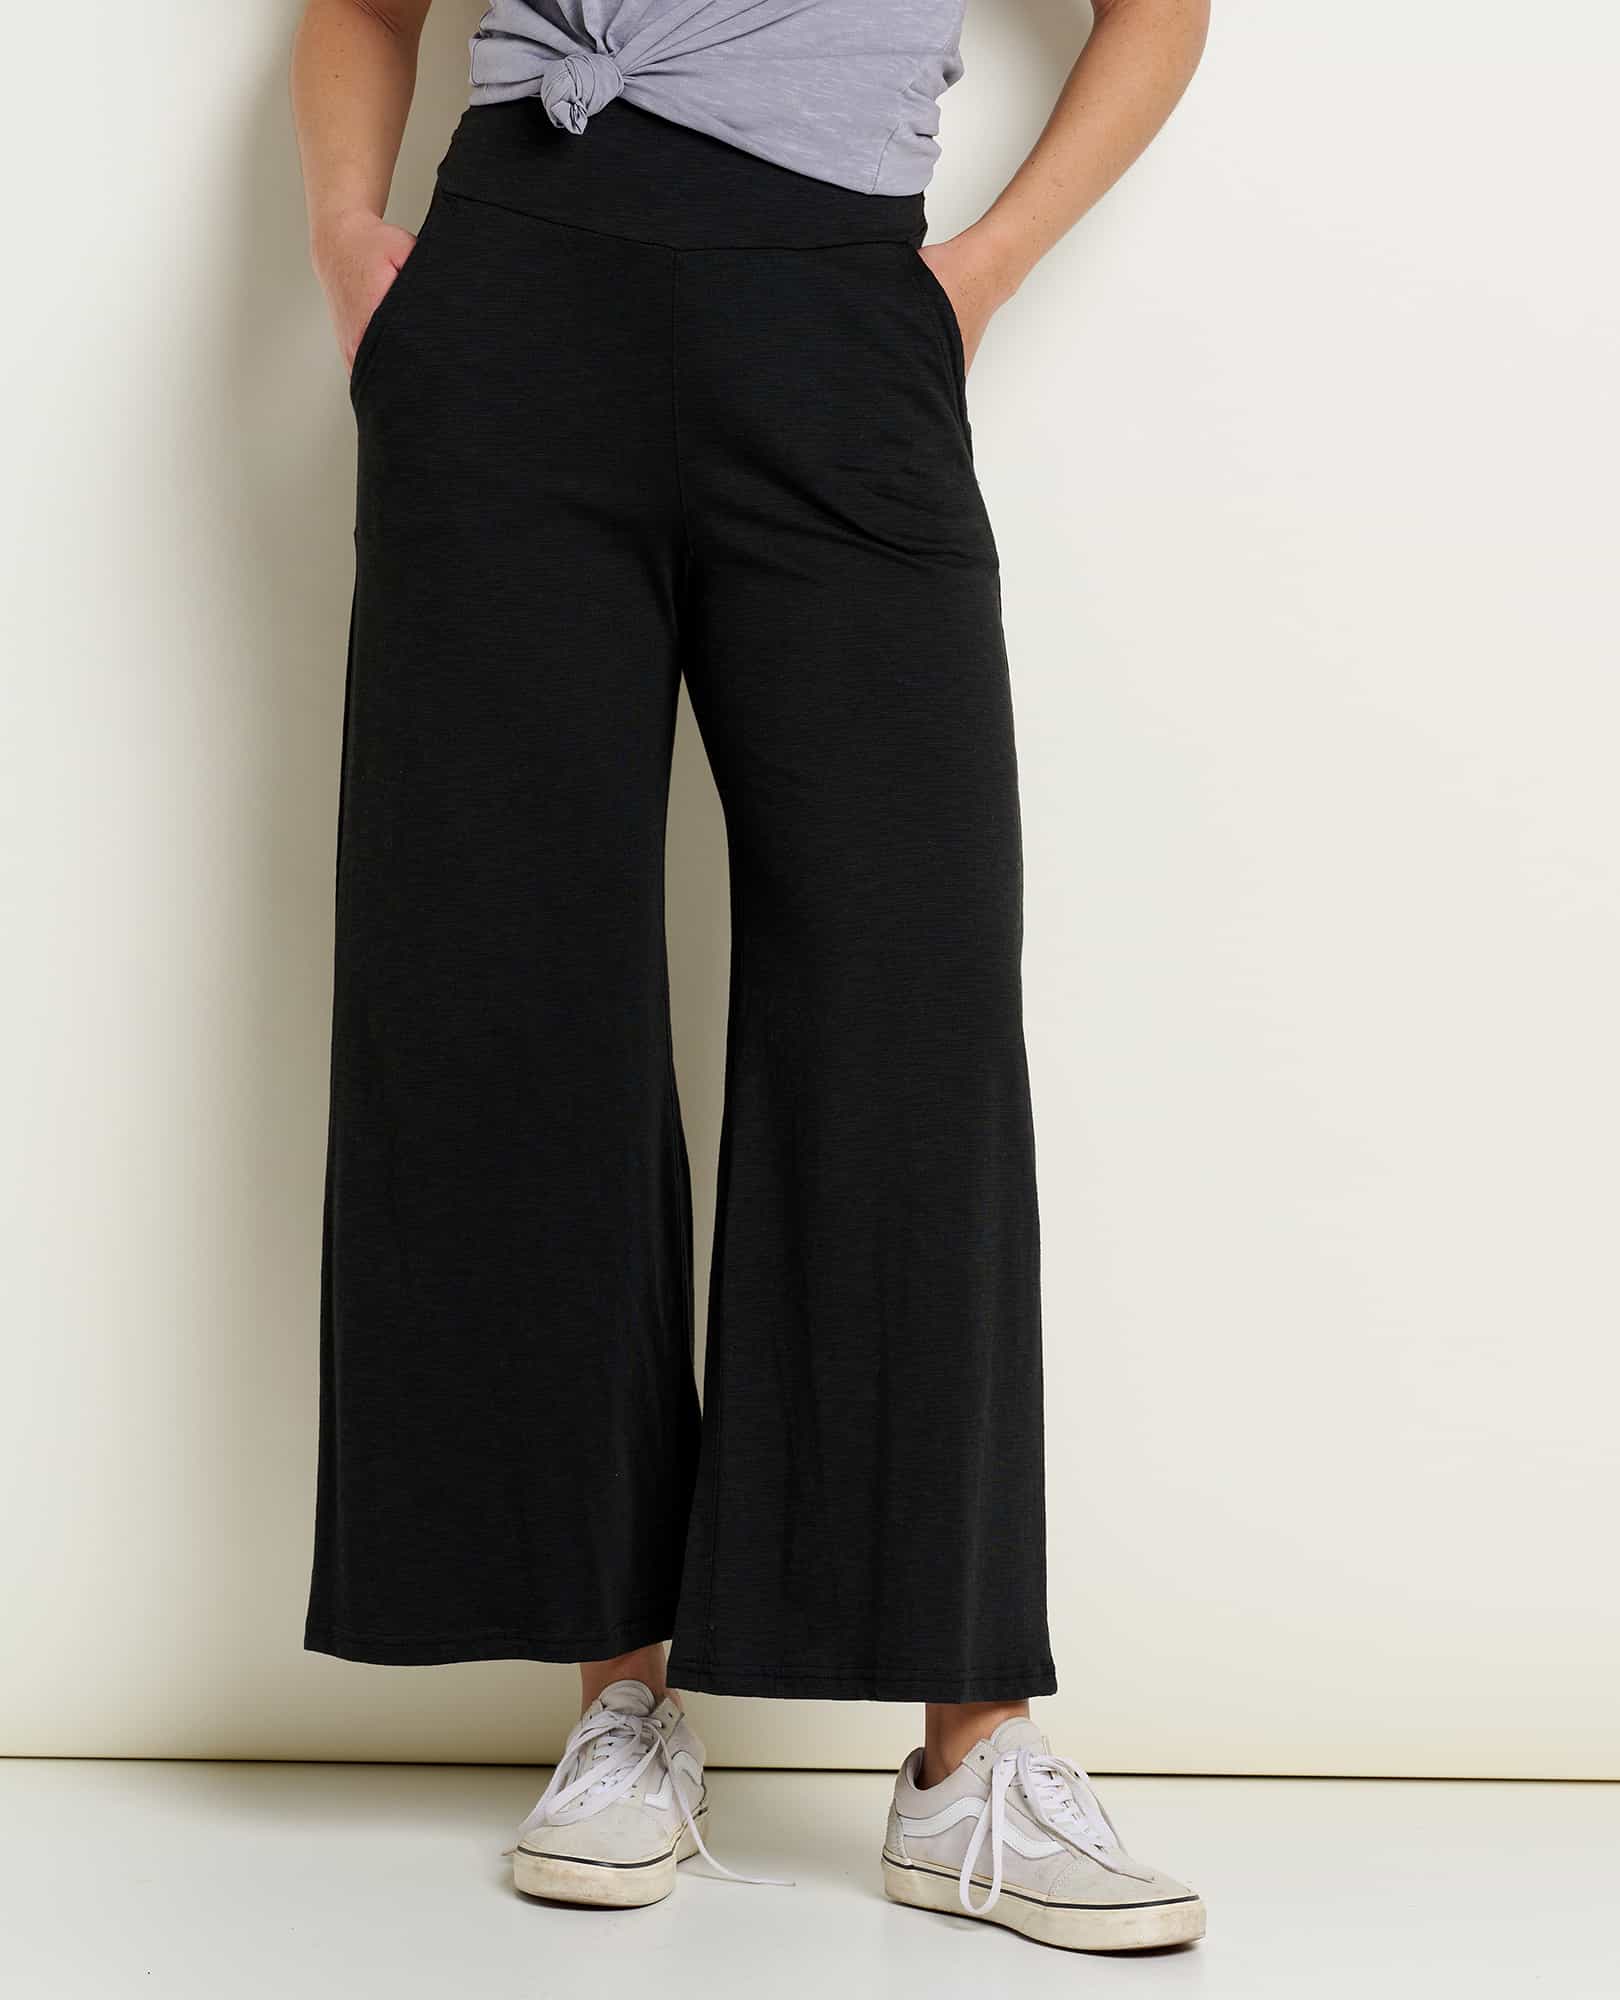 Black Lounge Pants, Comfortable Women's Pants